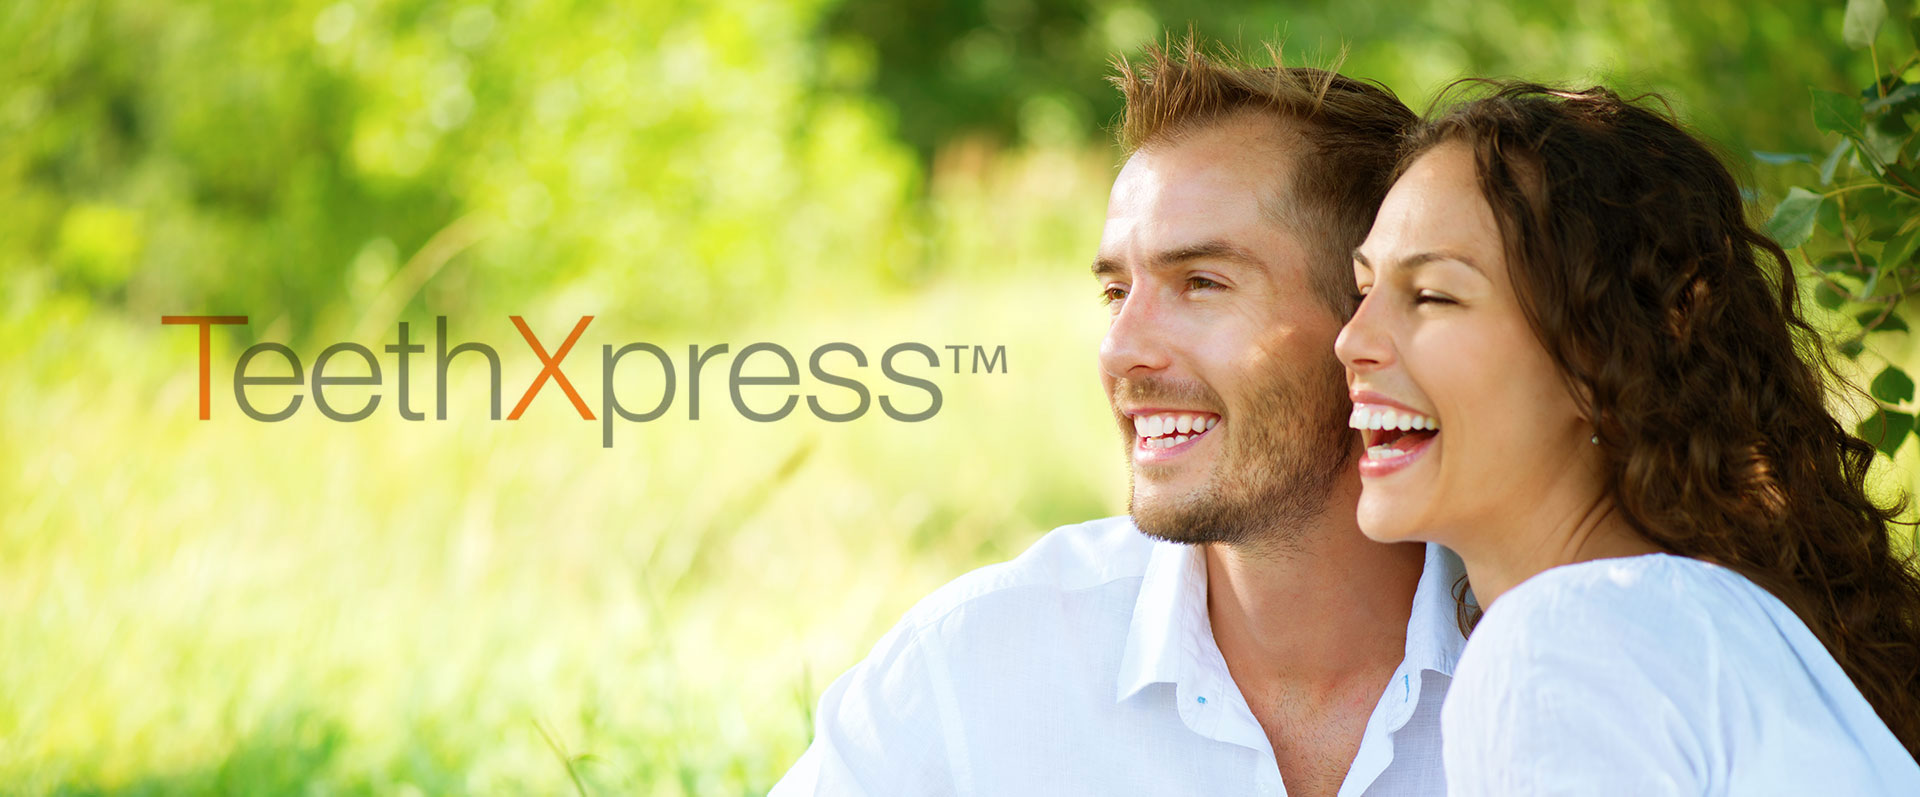 TeethXpress Dental Implants